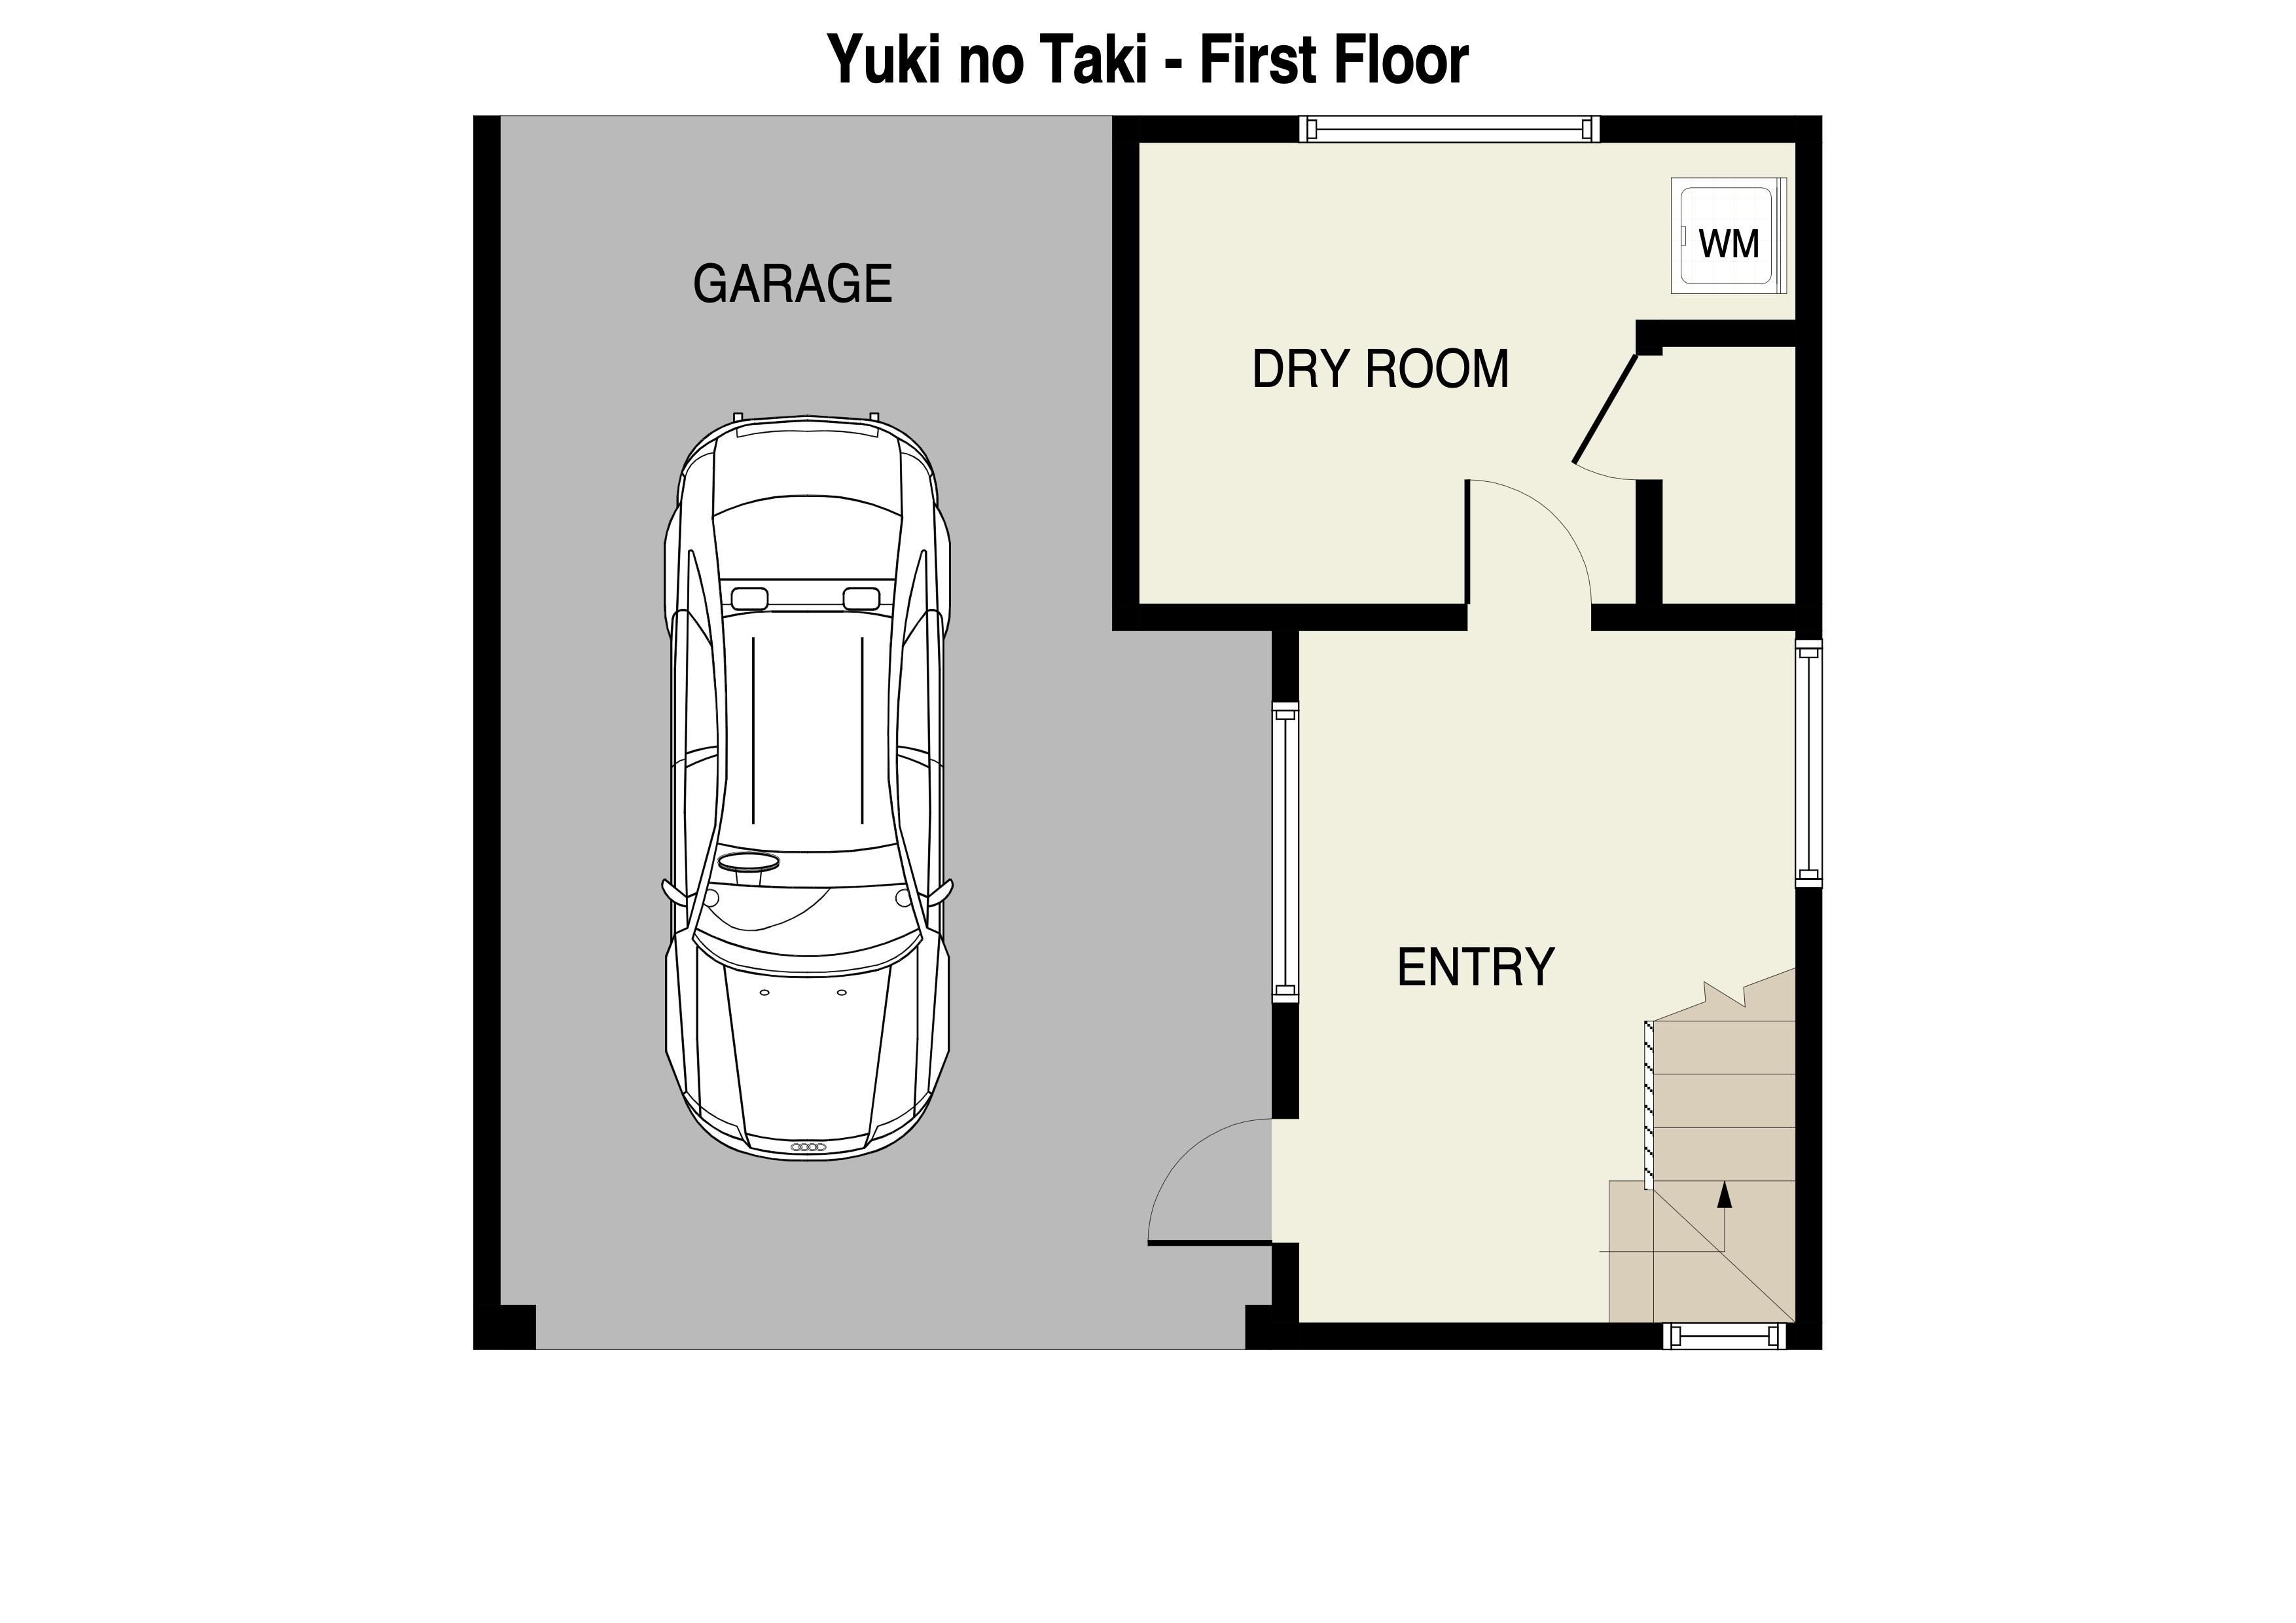 Yuki no Taki 1st Floor Plan